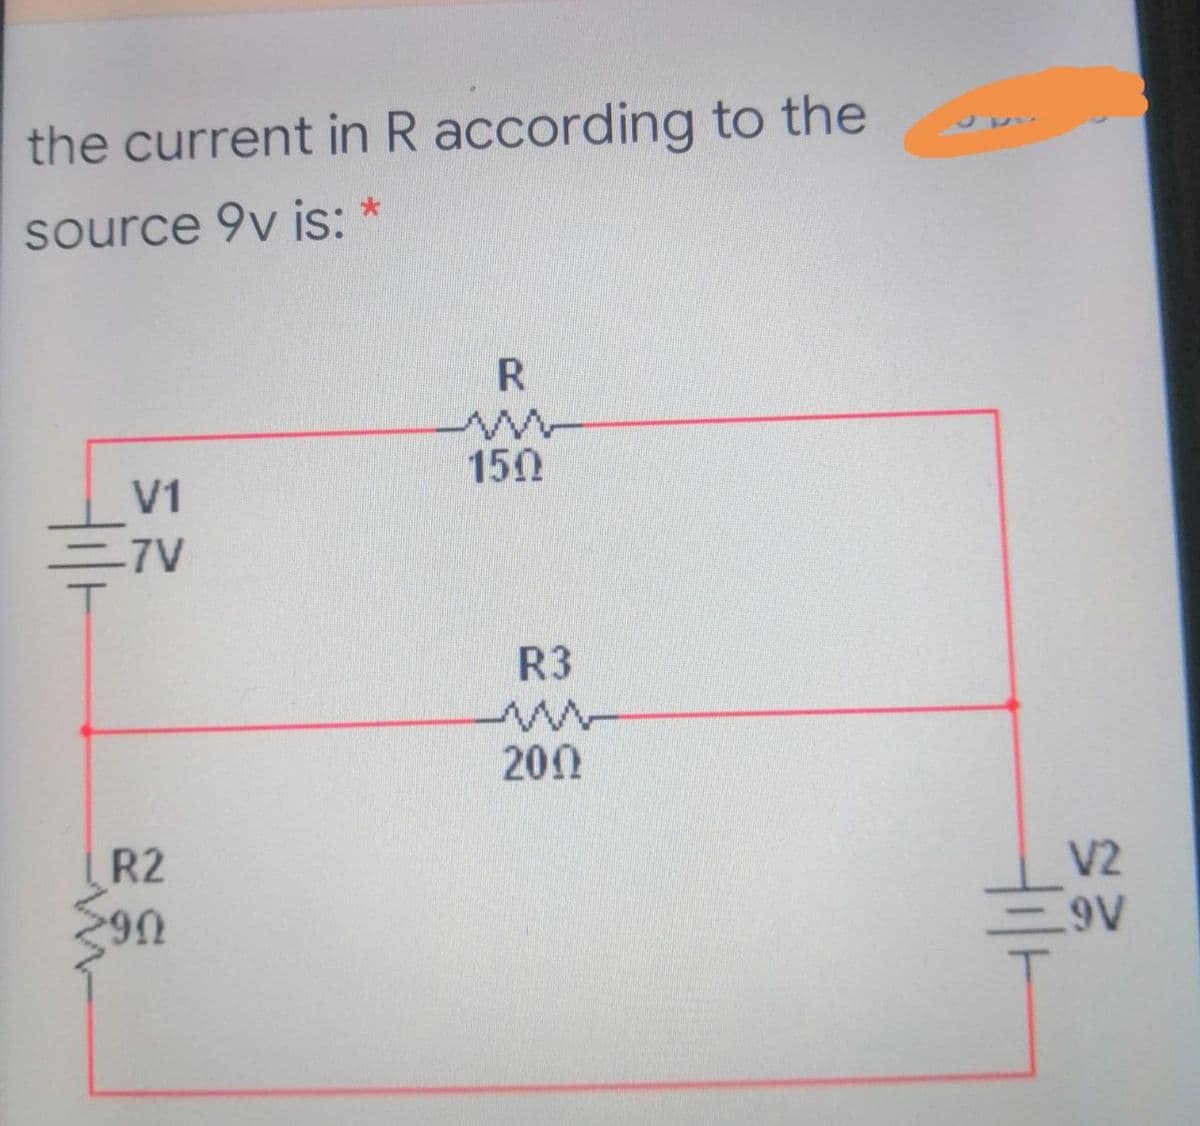 the current in R according to the
source 9v is: *
R
150
V1
=7V
R3
200
R2
V2
9V
Hil
